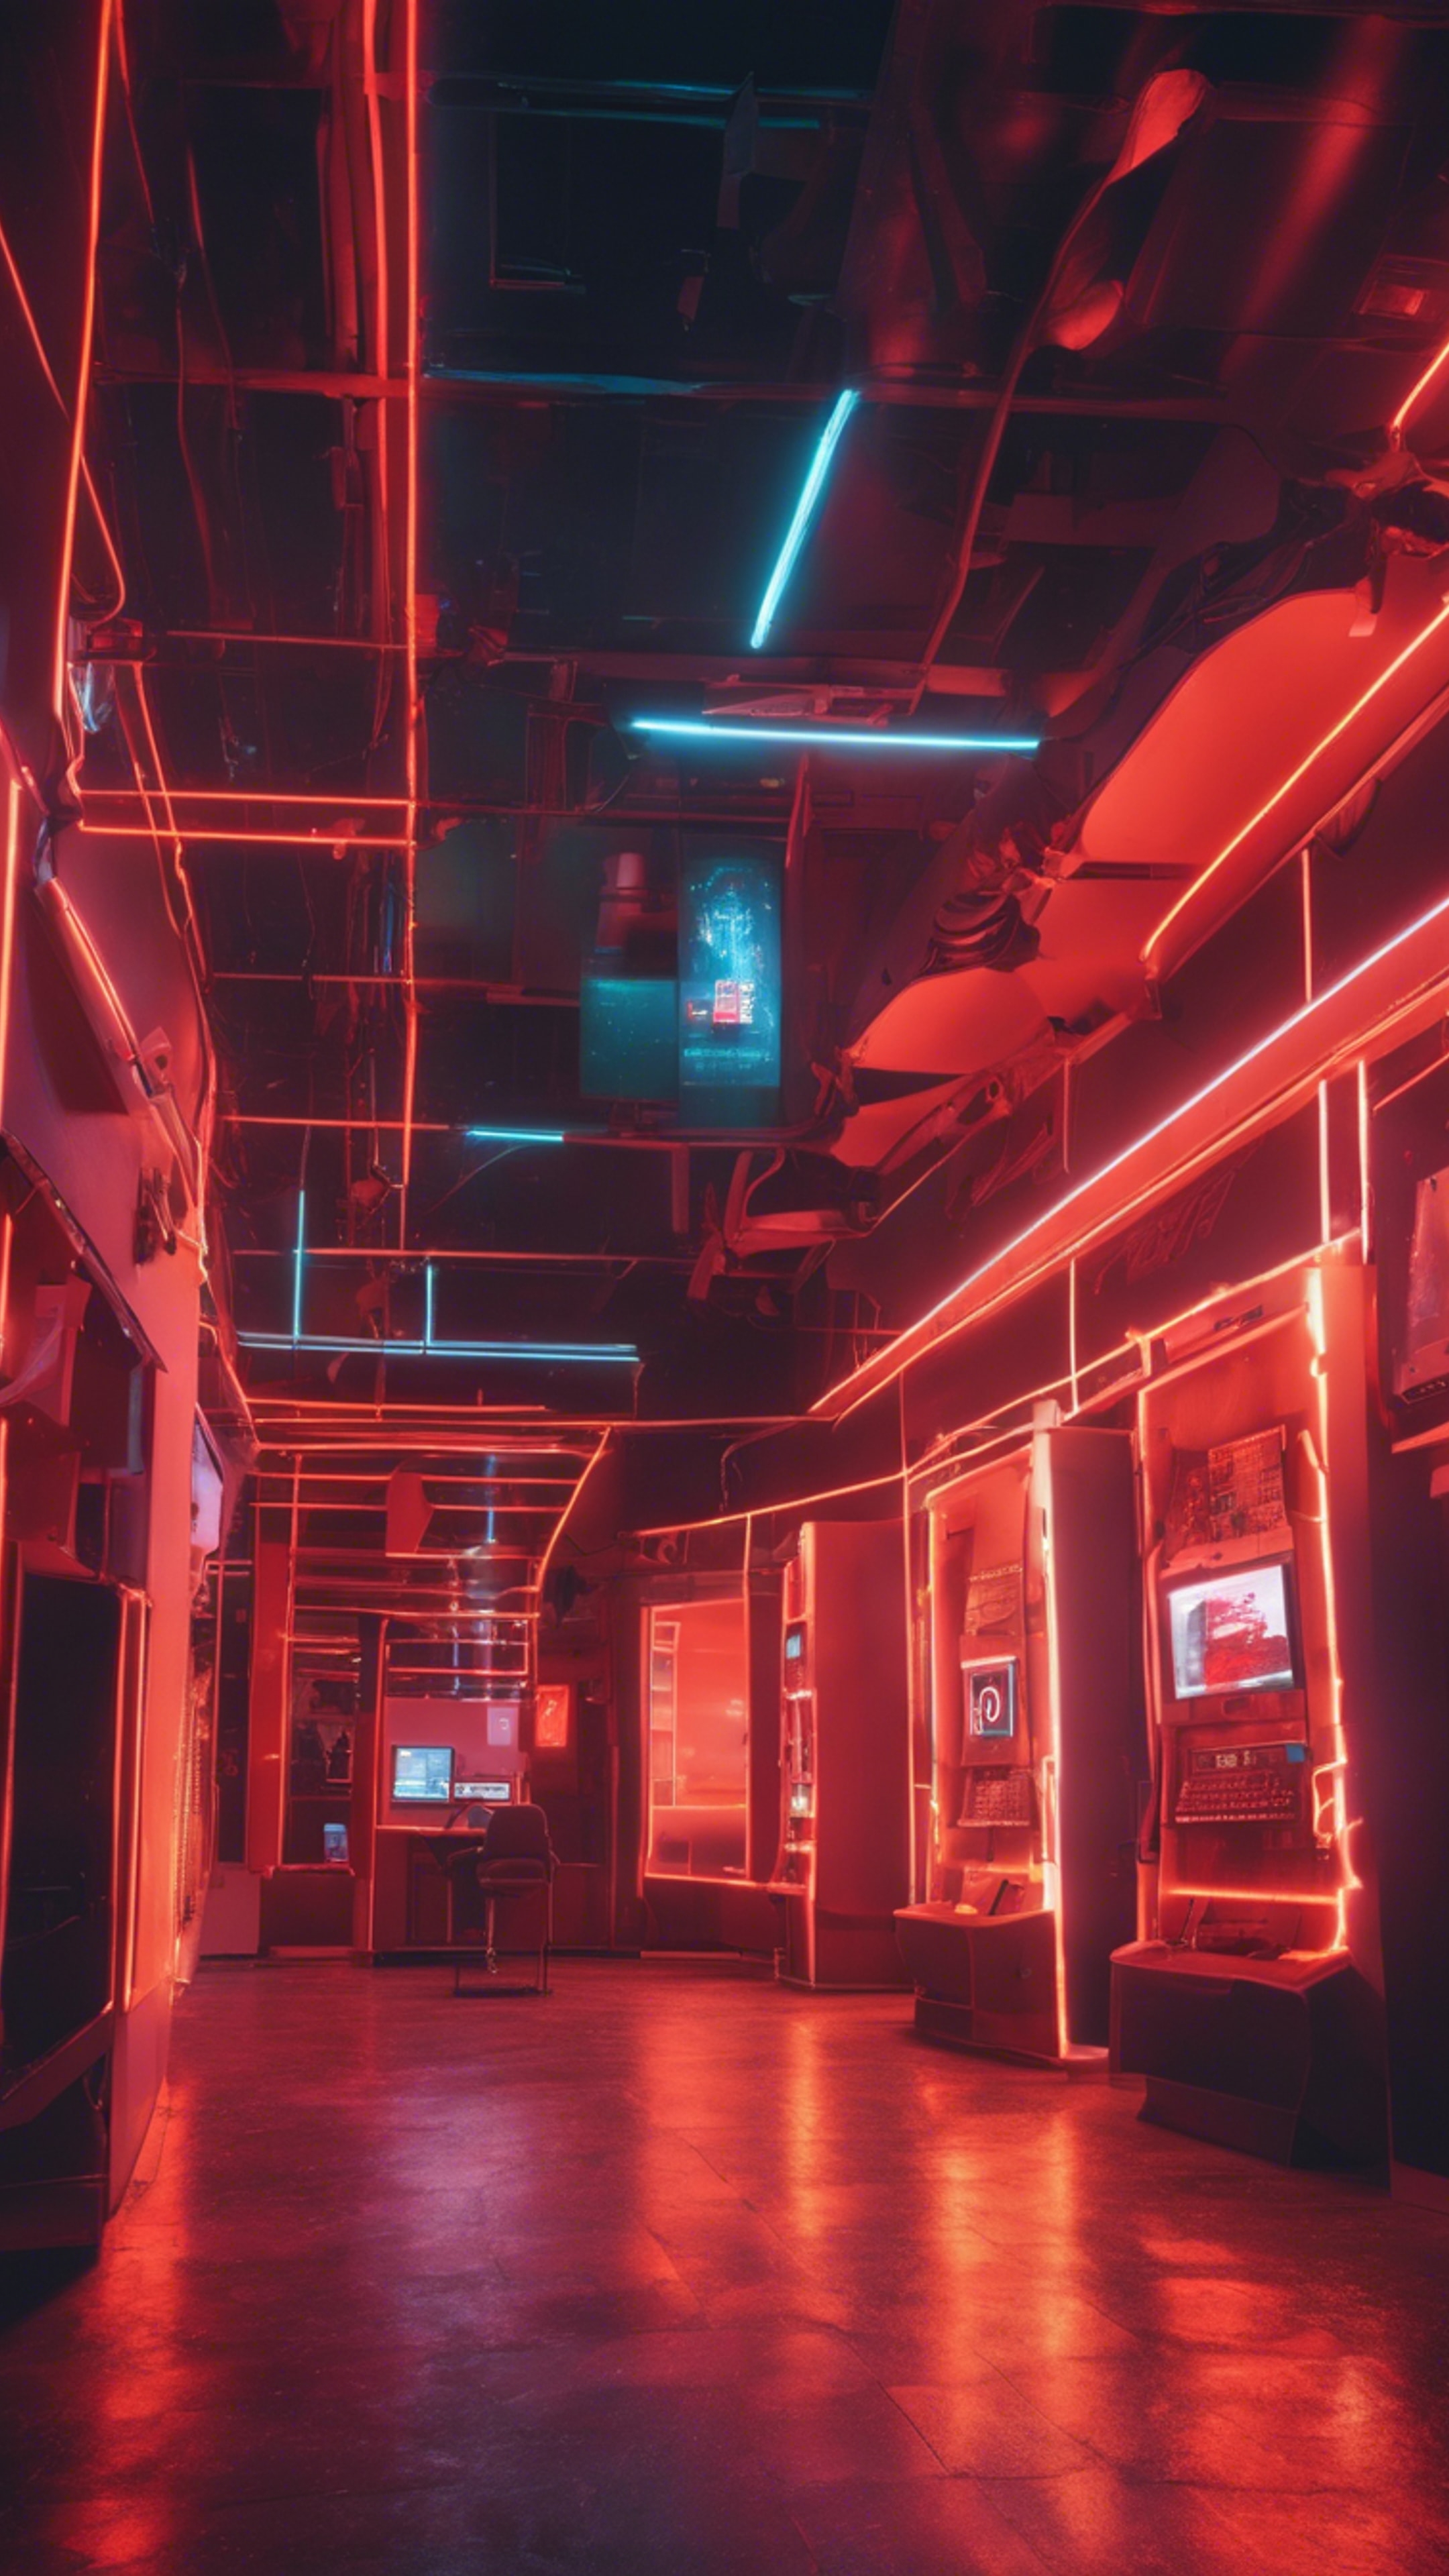 An architecturally unique cyber cafe glowing with neon red and orange lights at night. Fondo de pantalla[37c23e18da0f466d9ff8]